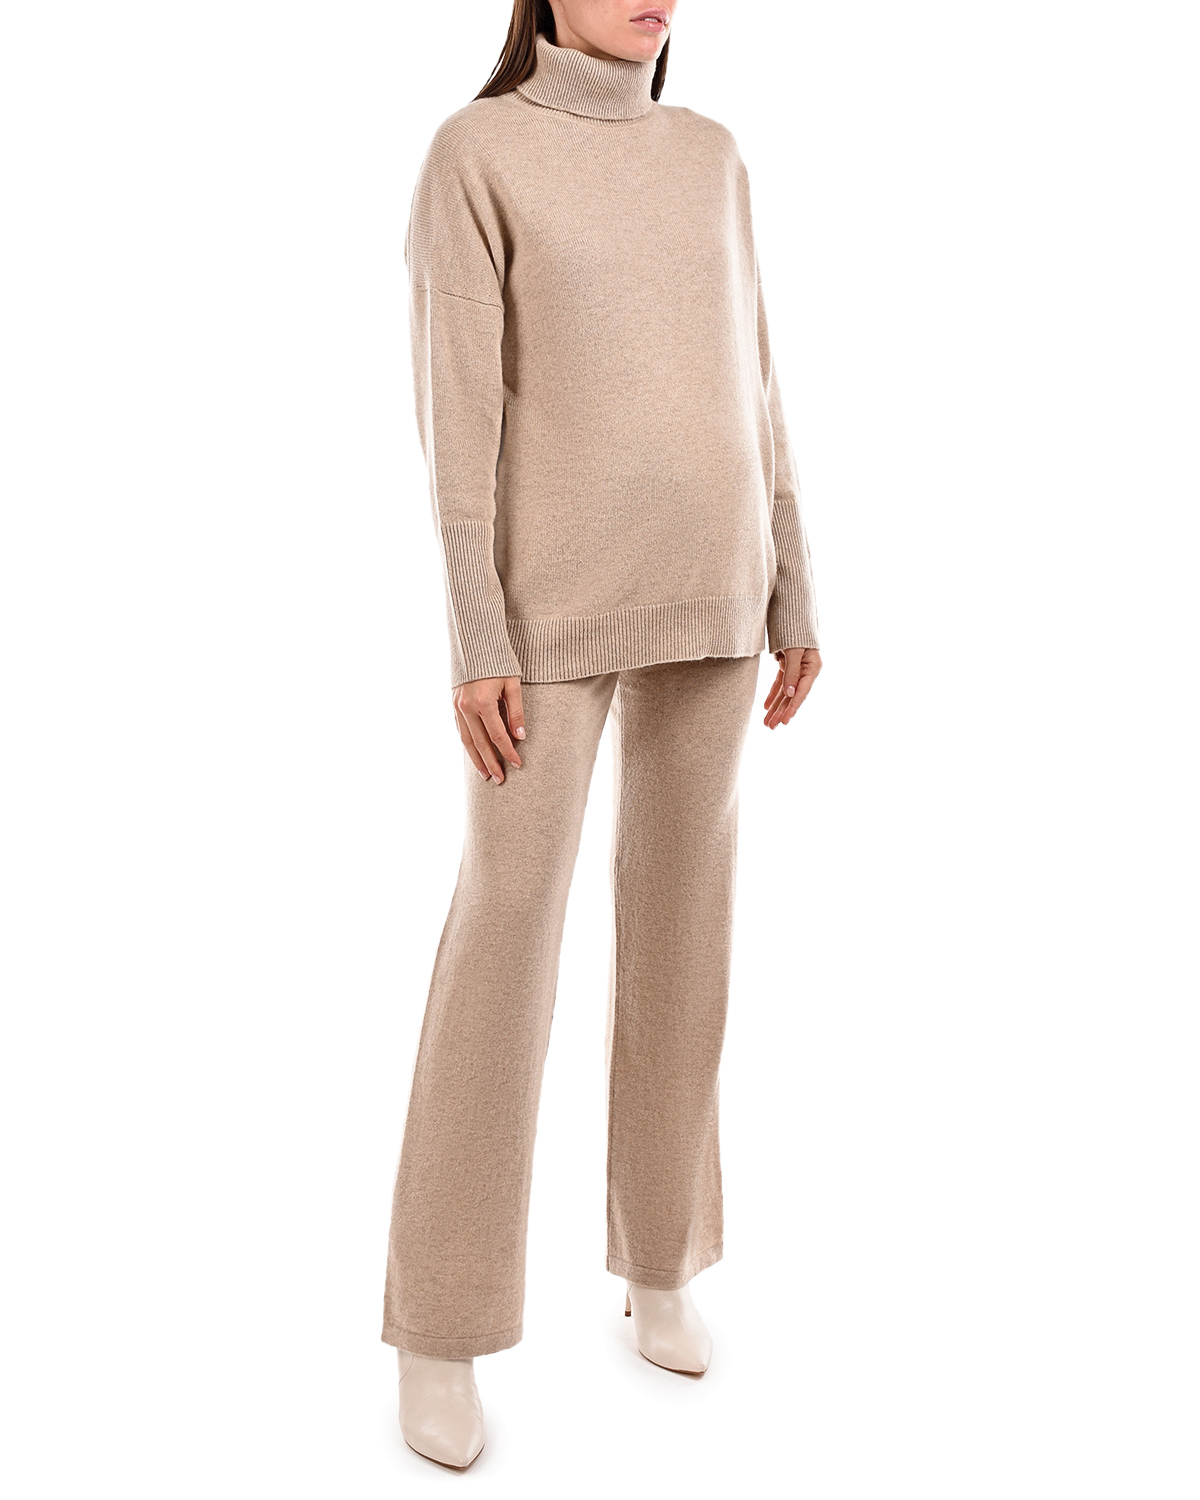 Бежевые брюки с поясом на кулиске Chinti&Parker, размер 38, цвет бежевый - фото 5